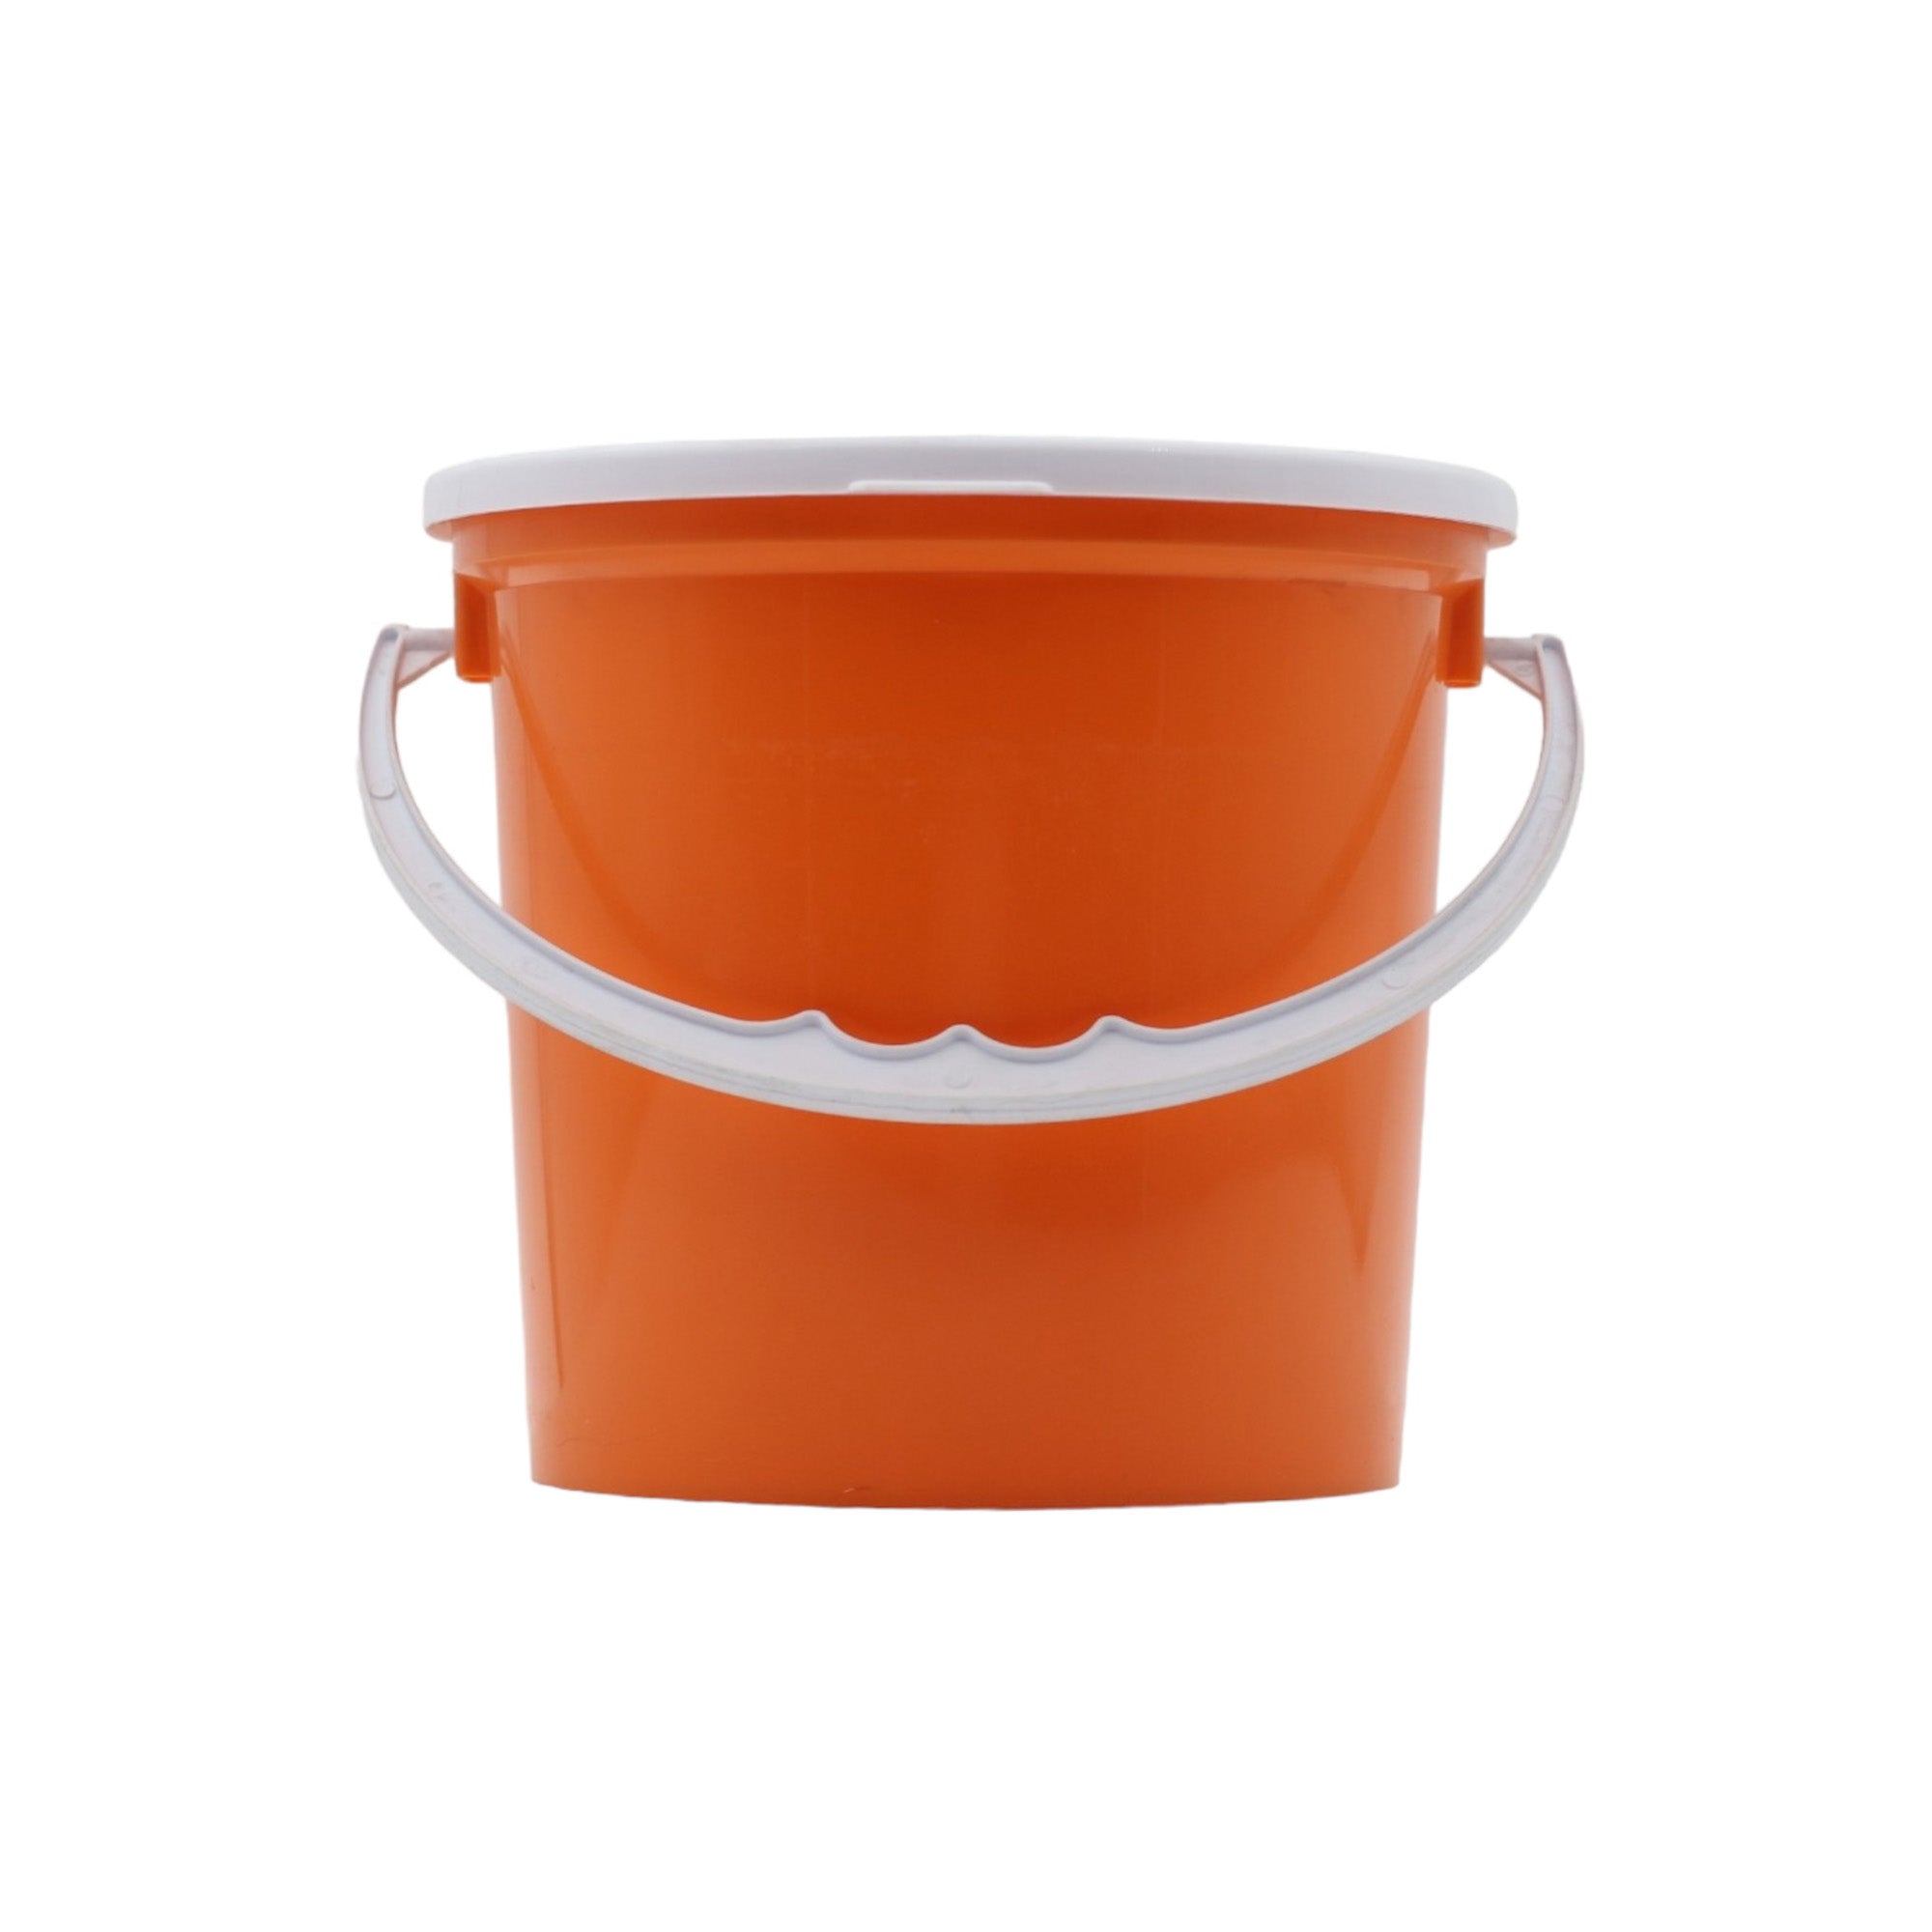 1L Plastic Bucket - Party Bucket Air Tight Lid